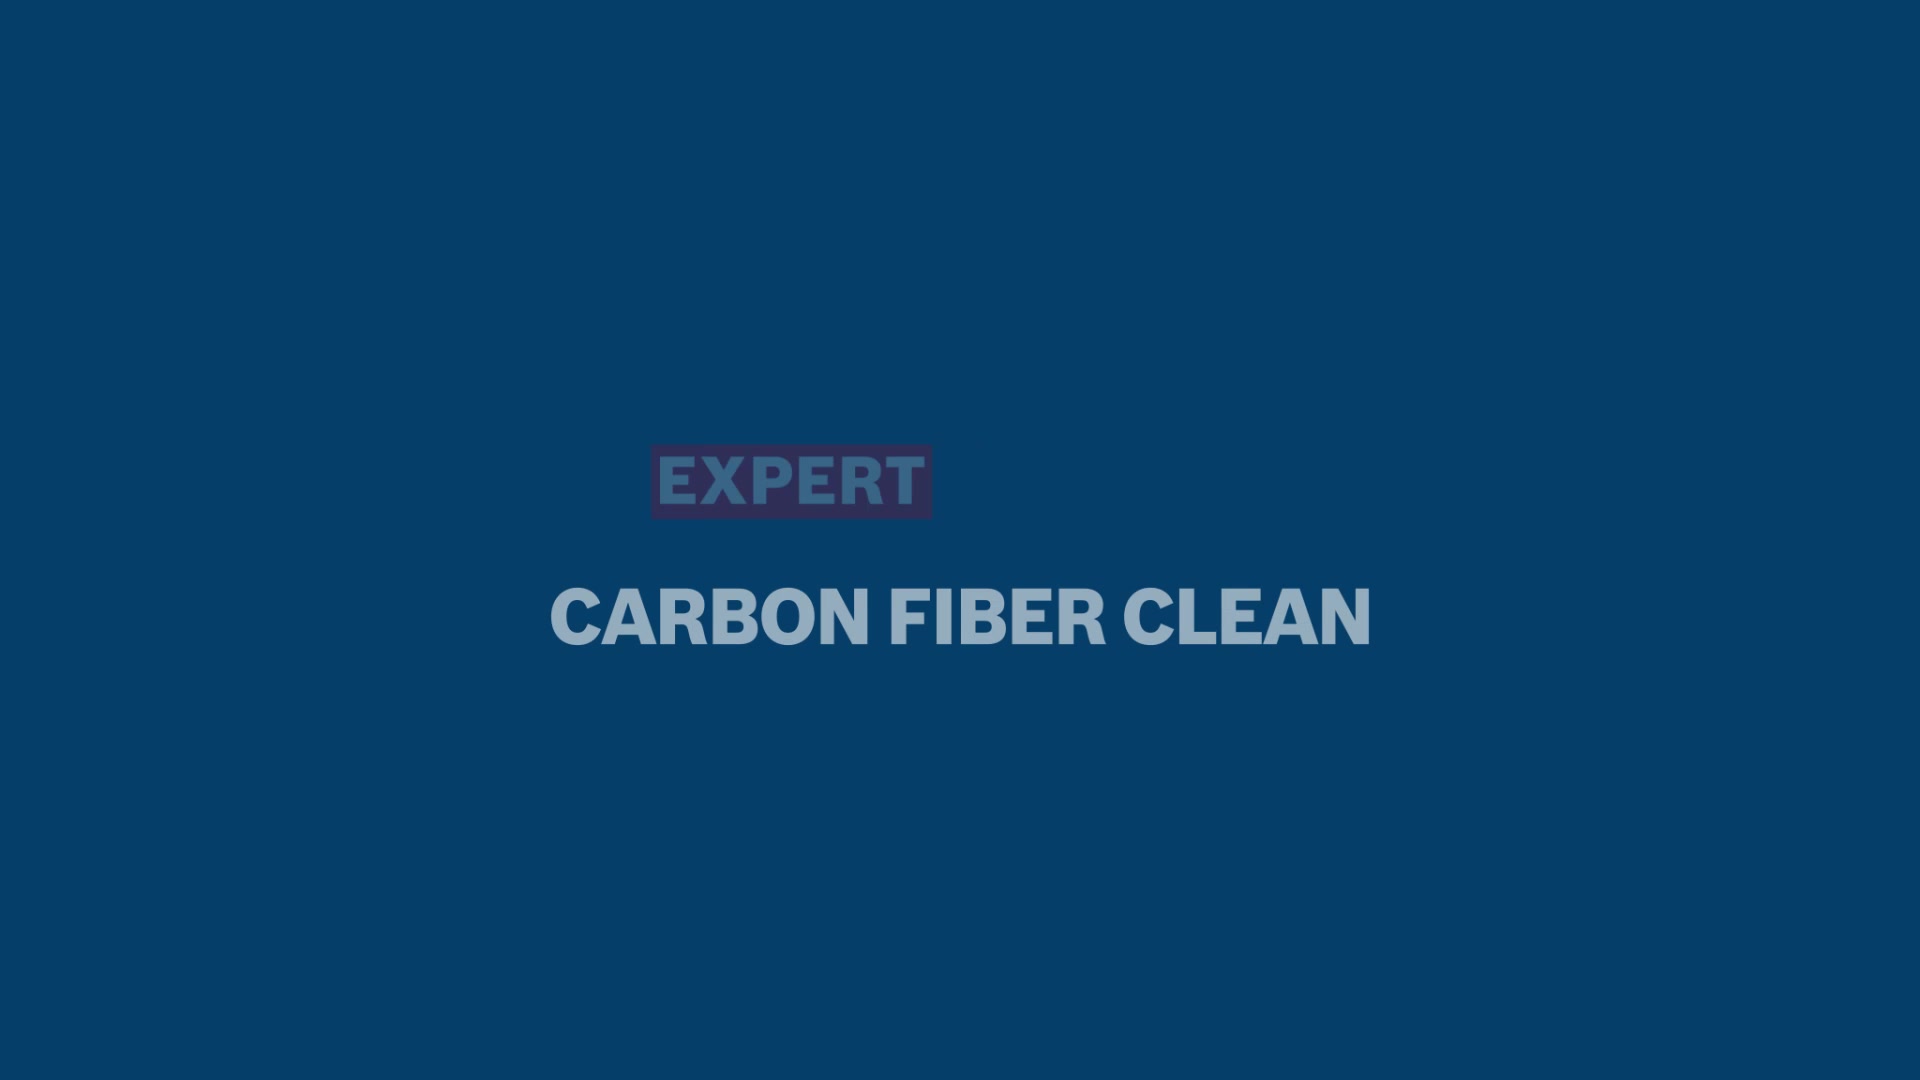 EXPERT Carbon Fiber Clean